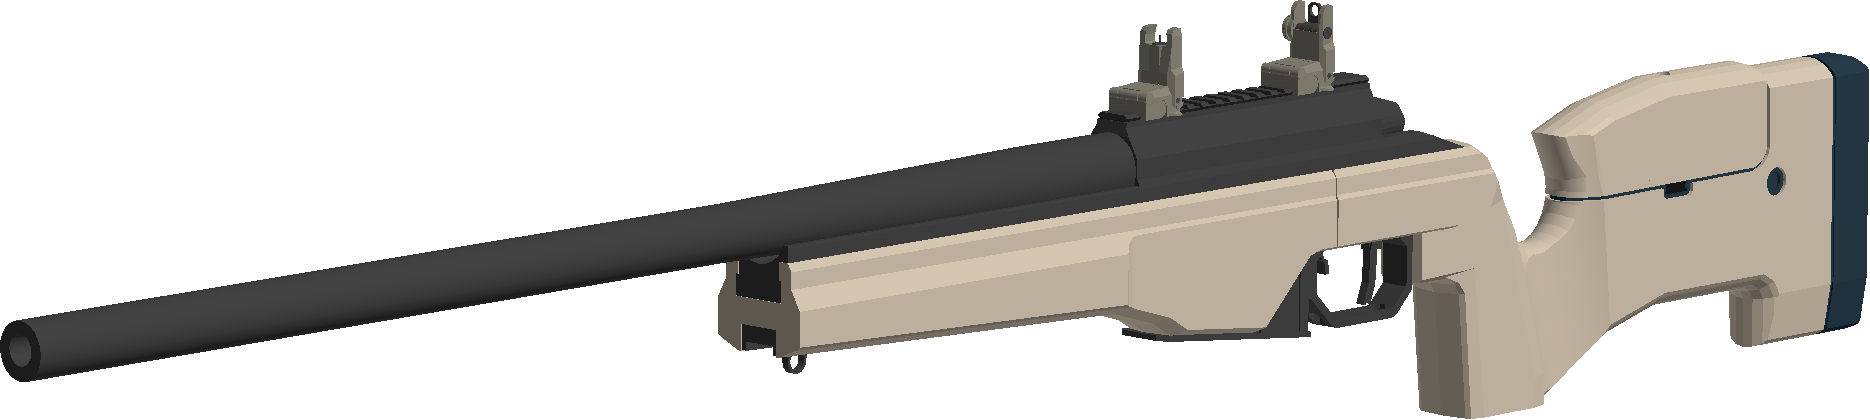 Trg 42 Phantom Forces Wiki Fandom - roblox phantom forces best sniper loadout